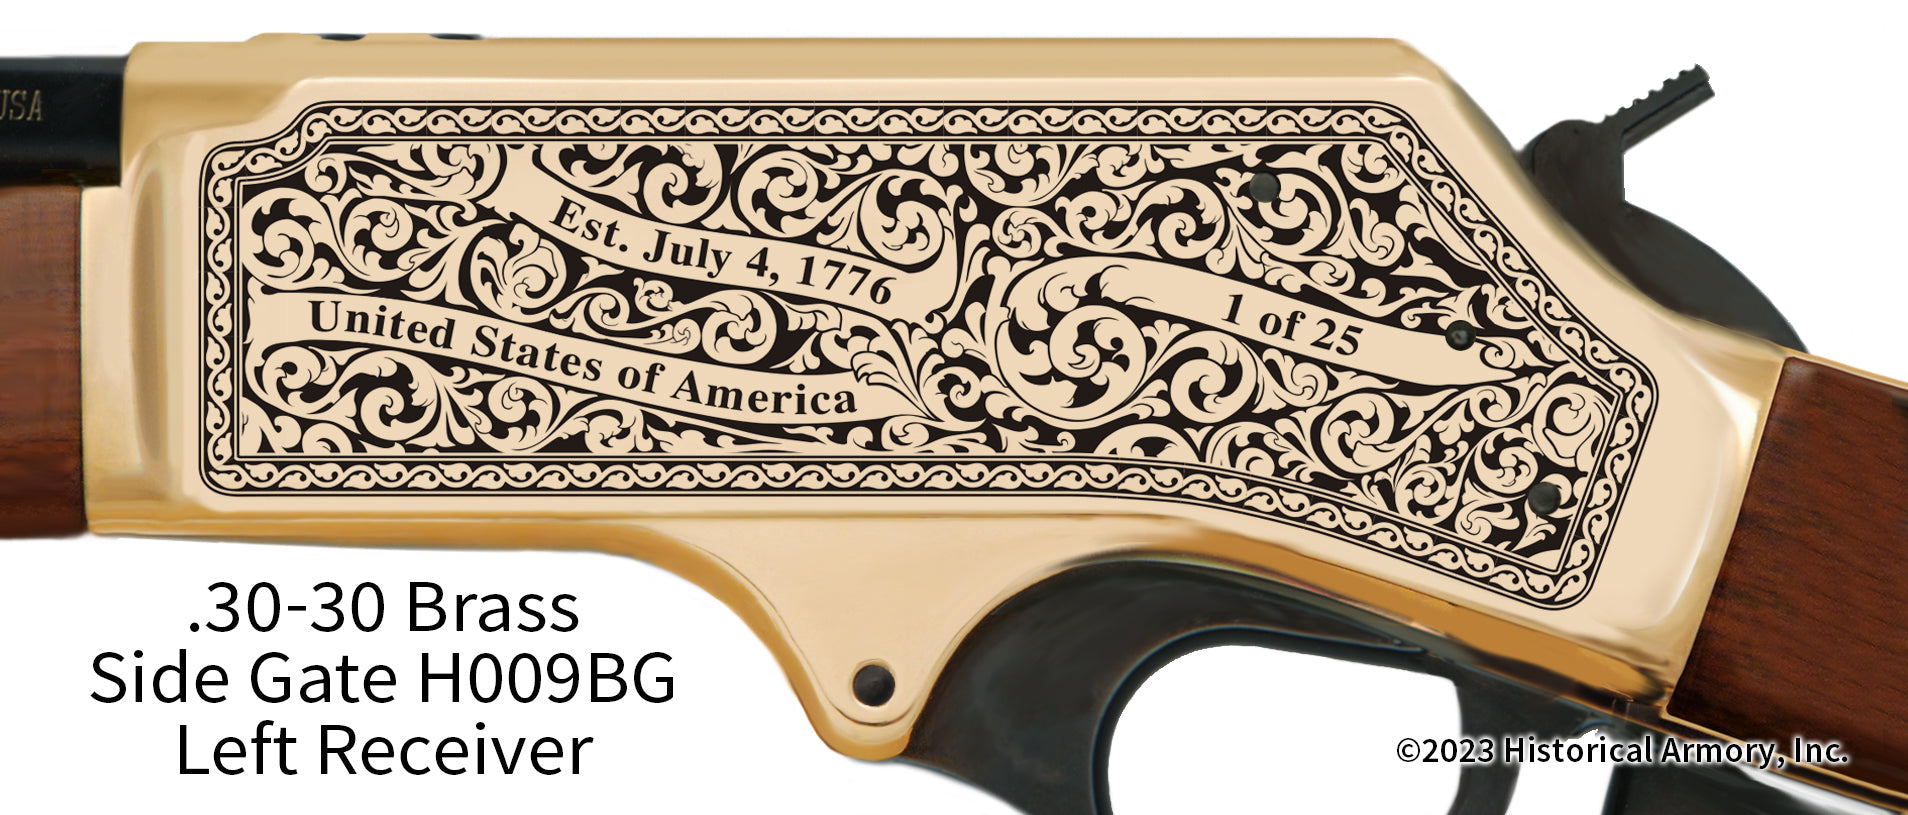 Ste. Genevieve County Missouri Engraved Henry .30-30 Brass Side Gate Rifle